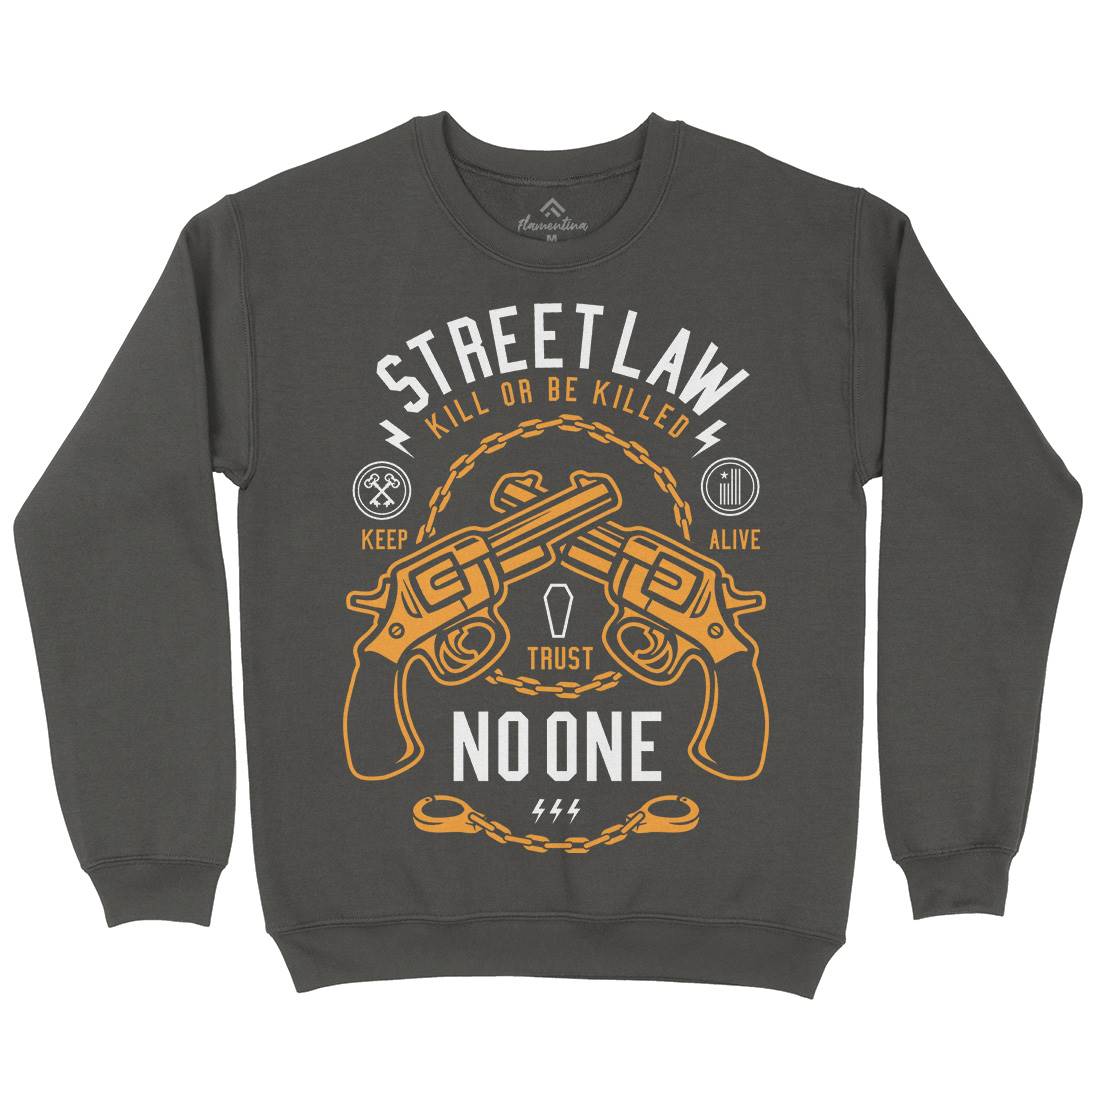 Street Law Kids Crew Neck Sweatshirt Quotes A286